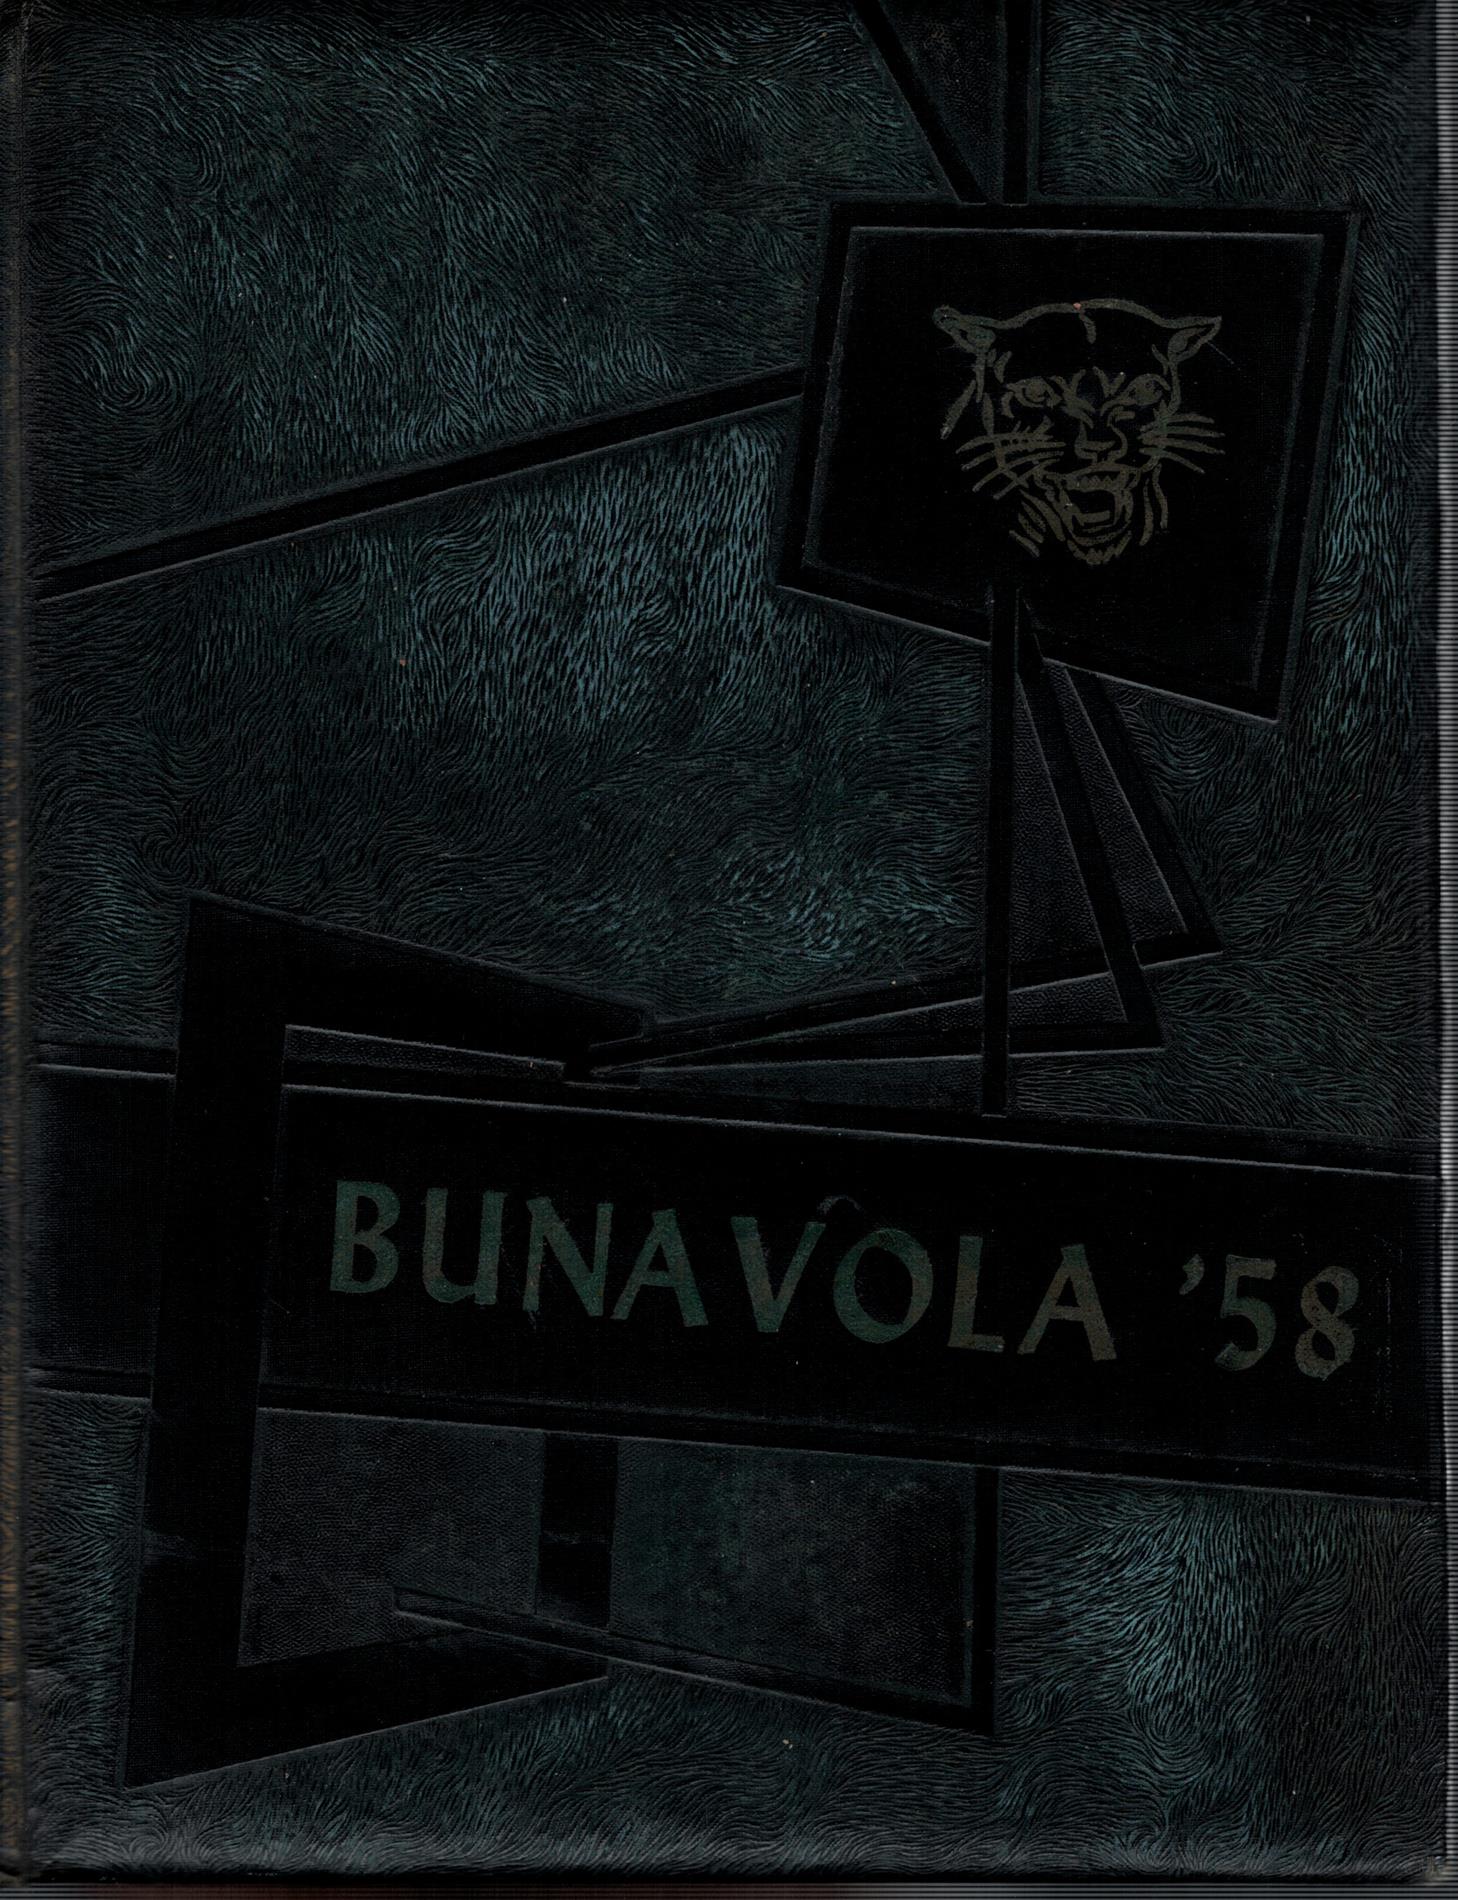 1958 Bunavola